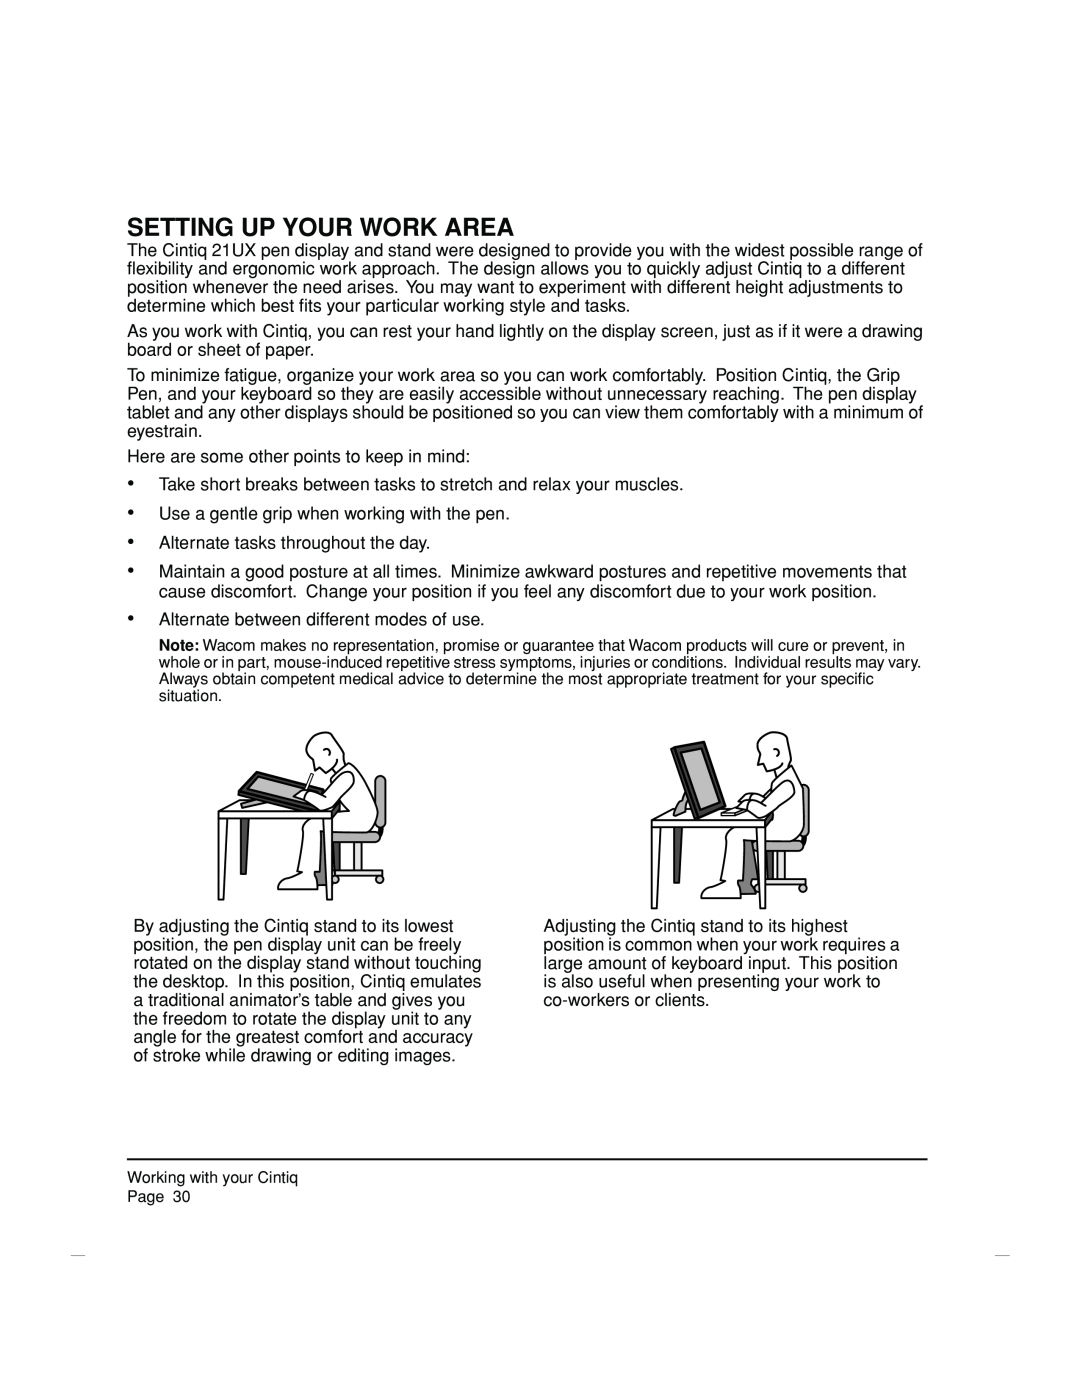 Wacom DTZ-2100D manual Setting Up Your Work Area 